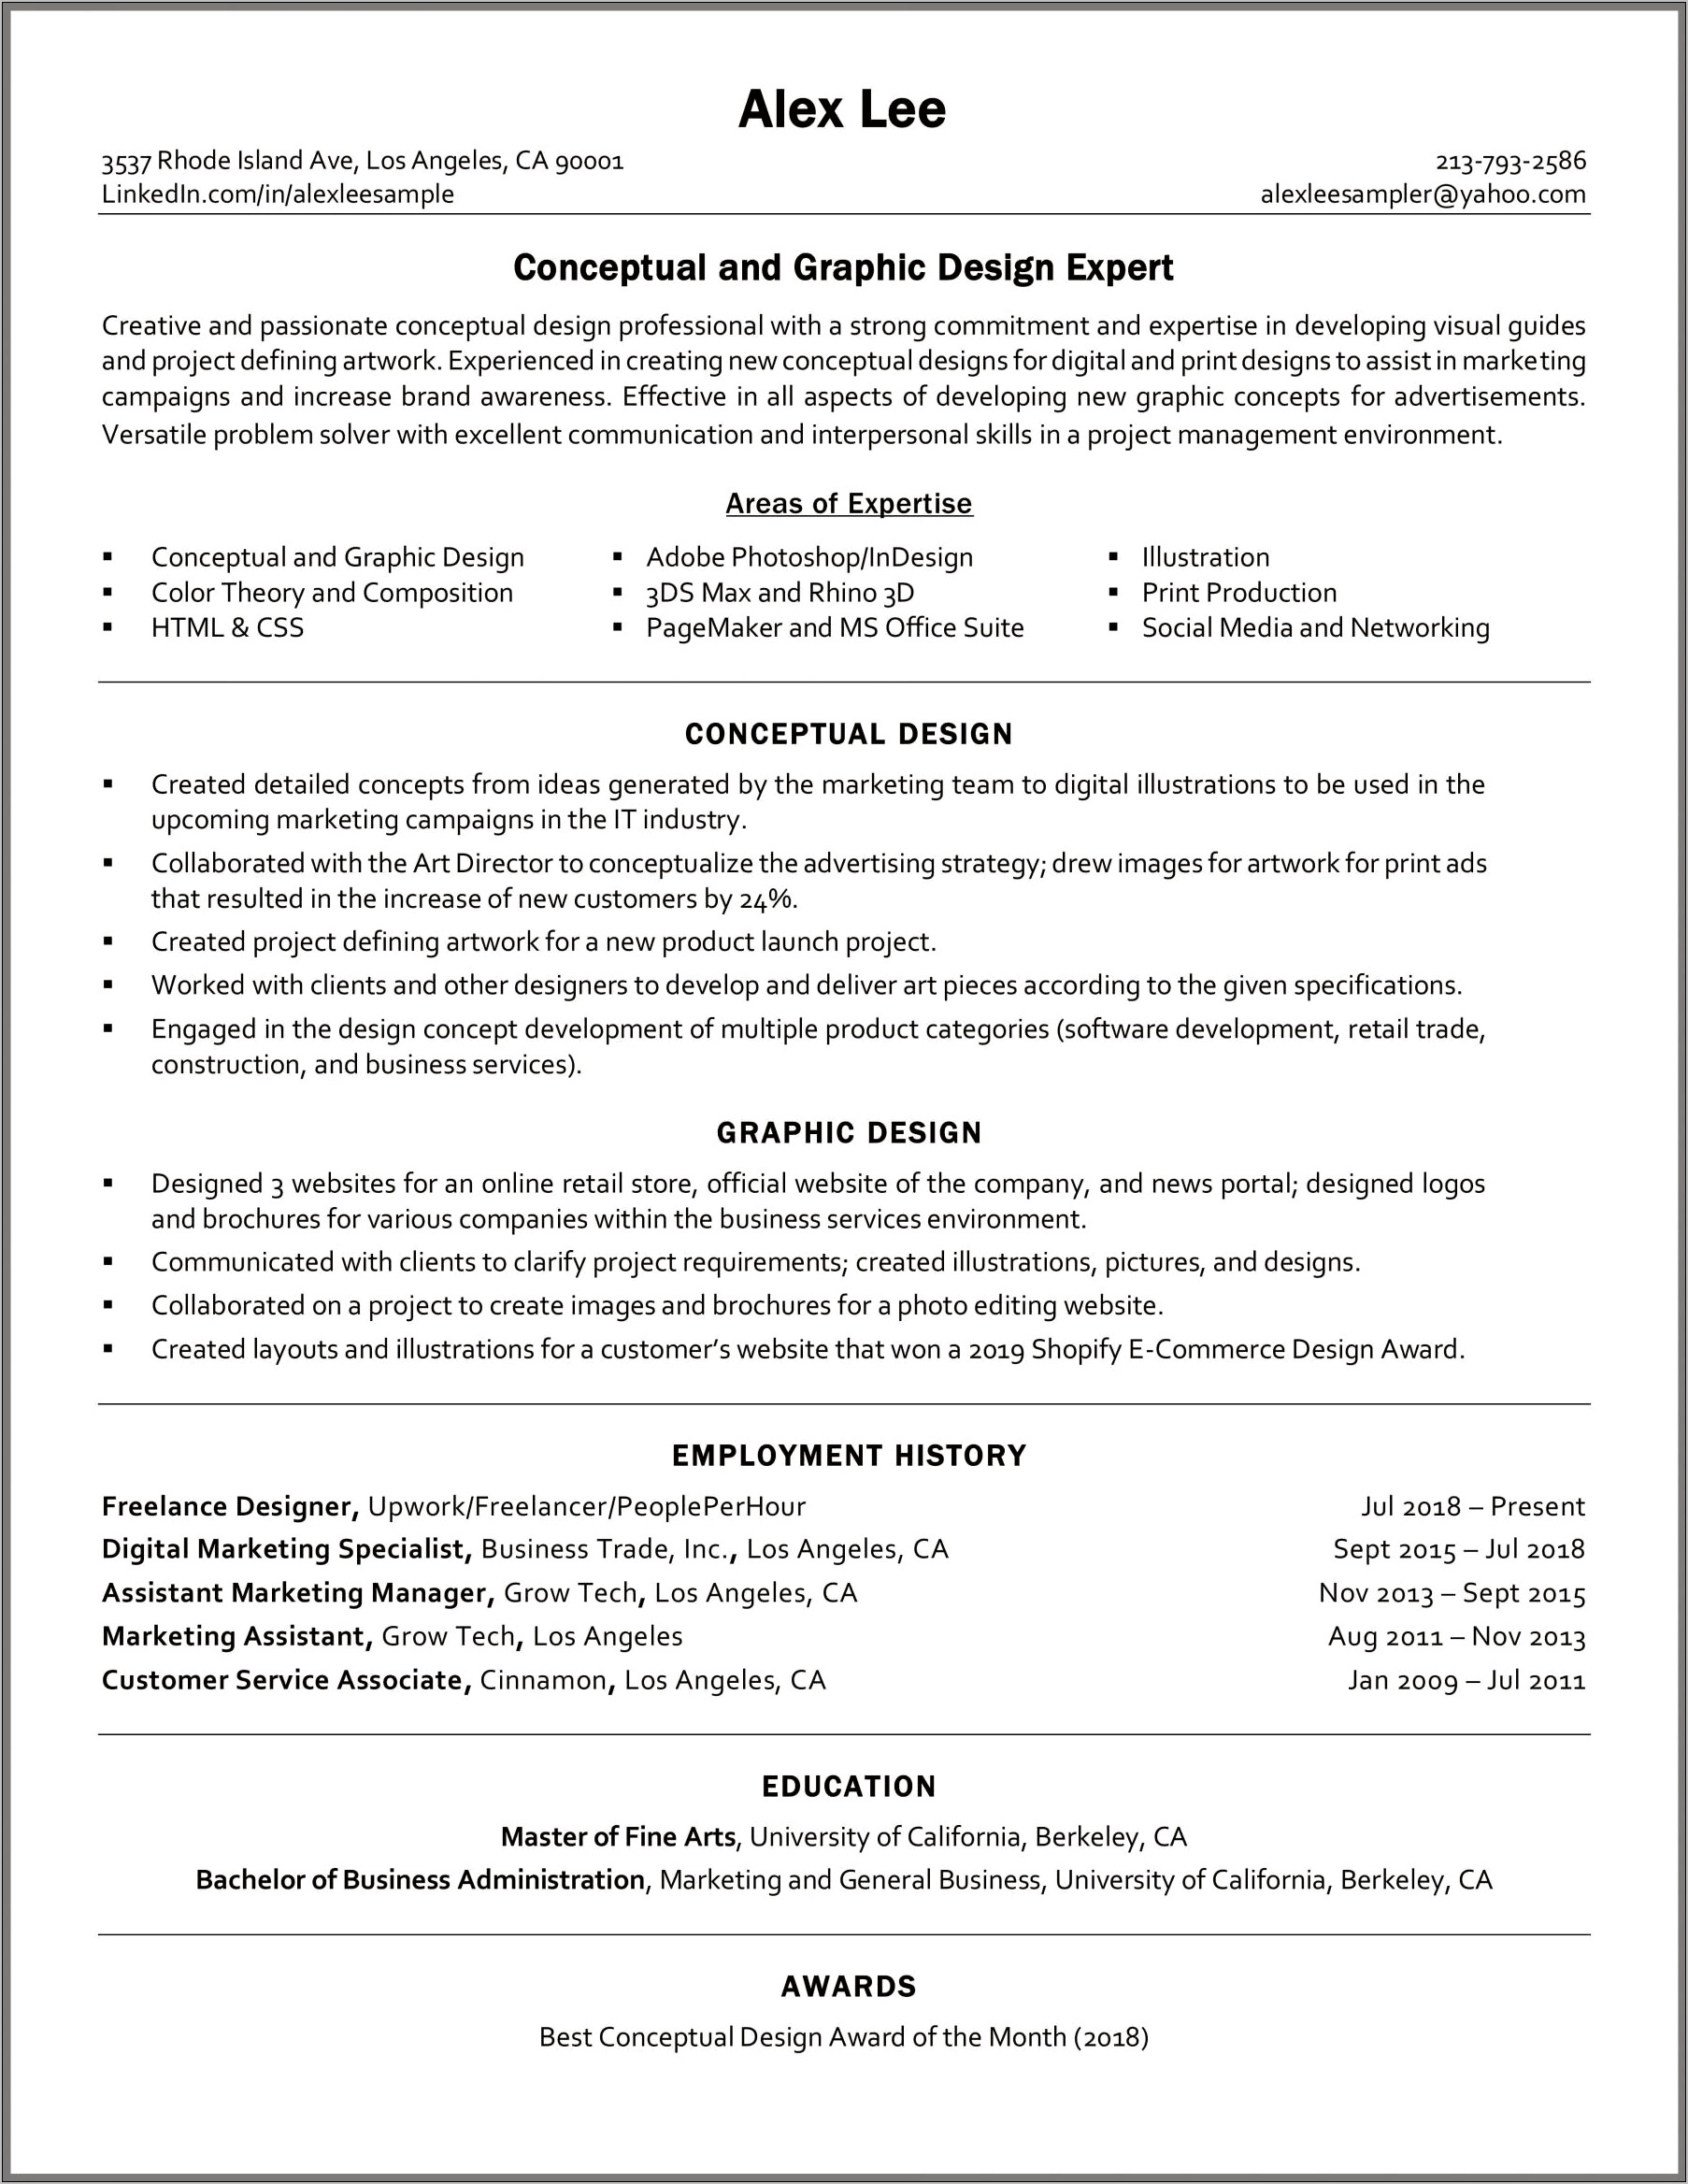 Sample Of Functional Or Skills Based Resume